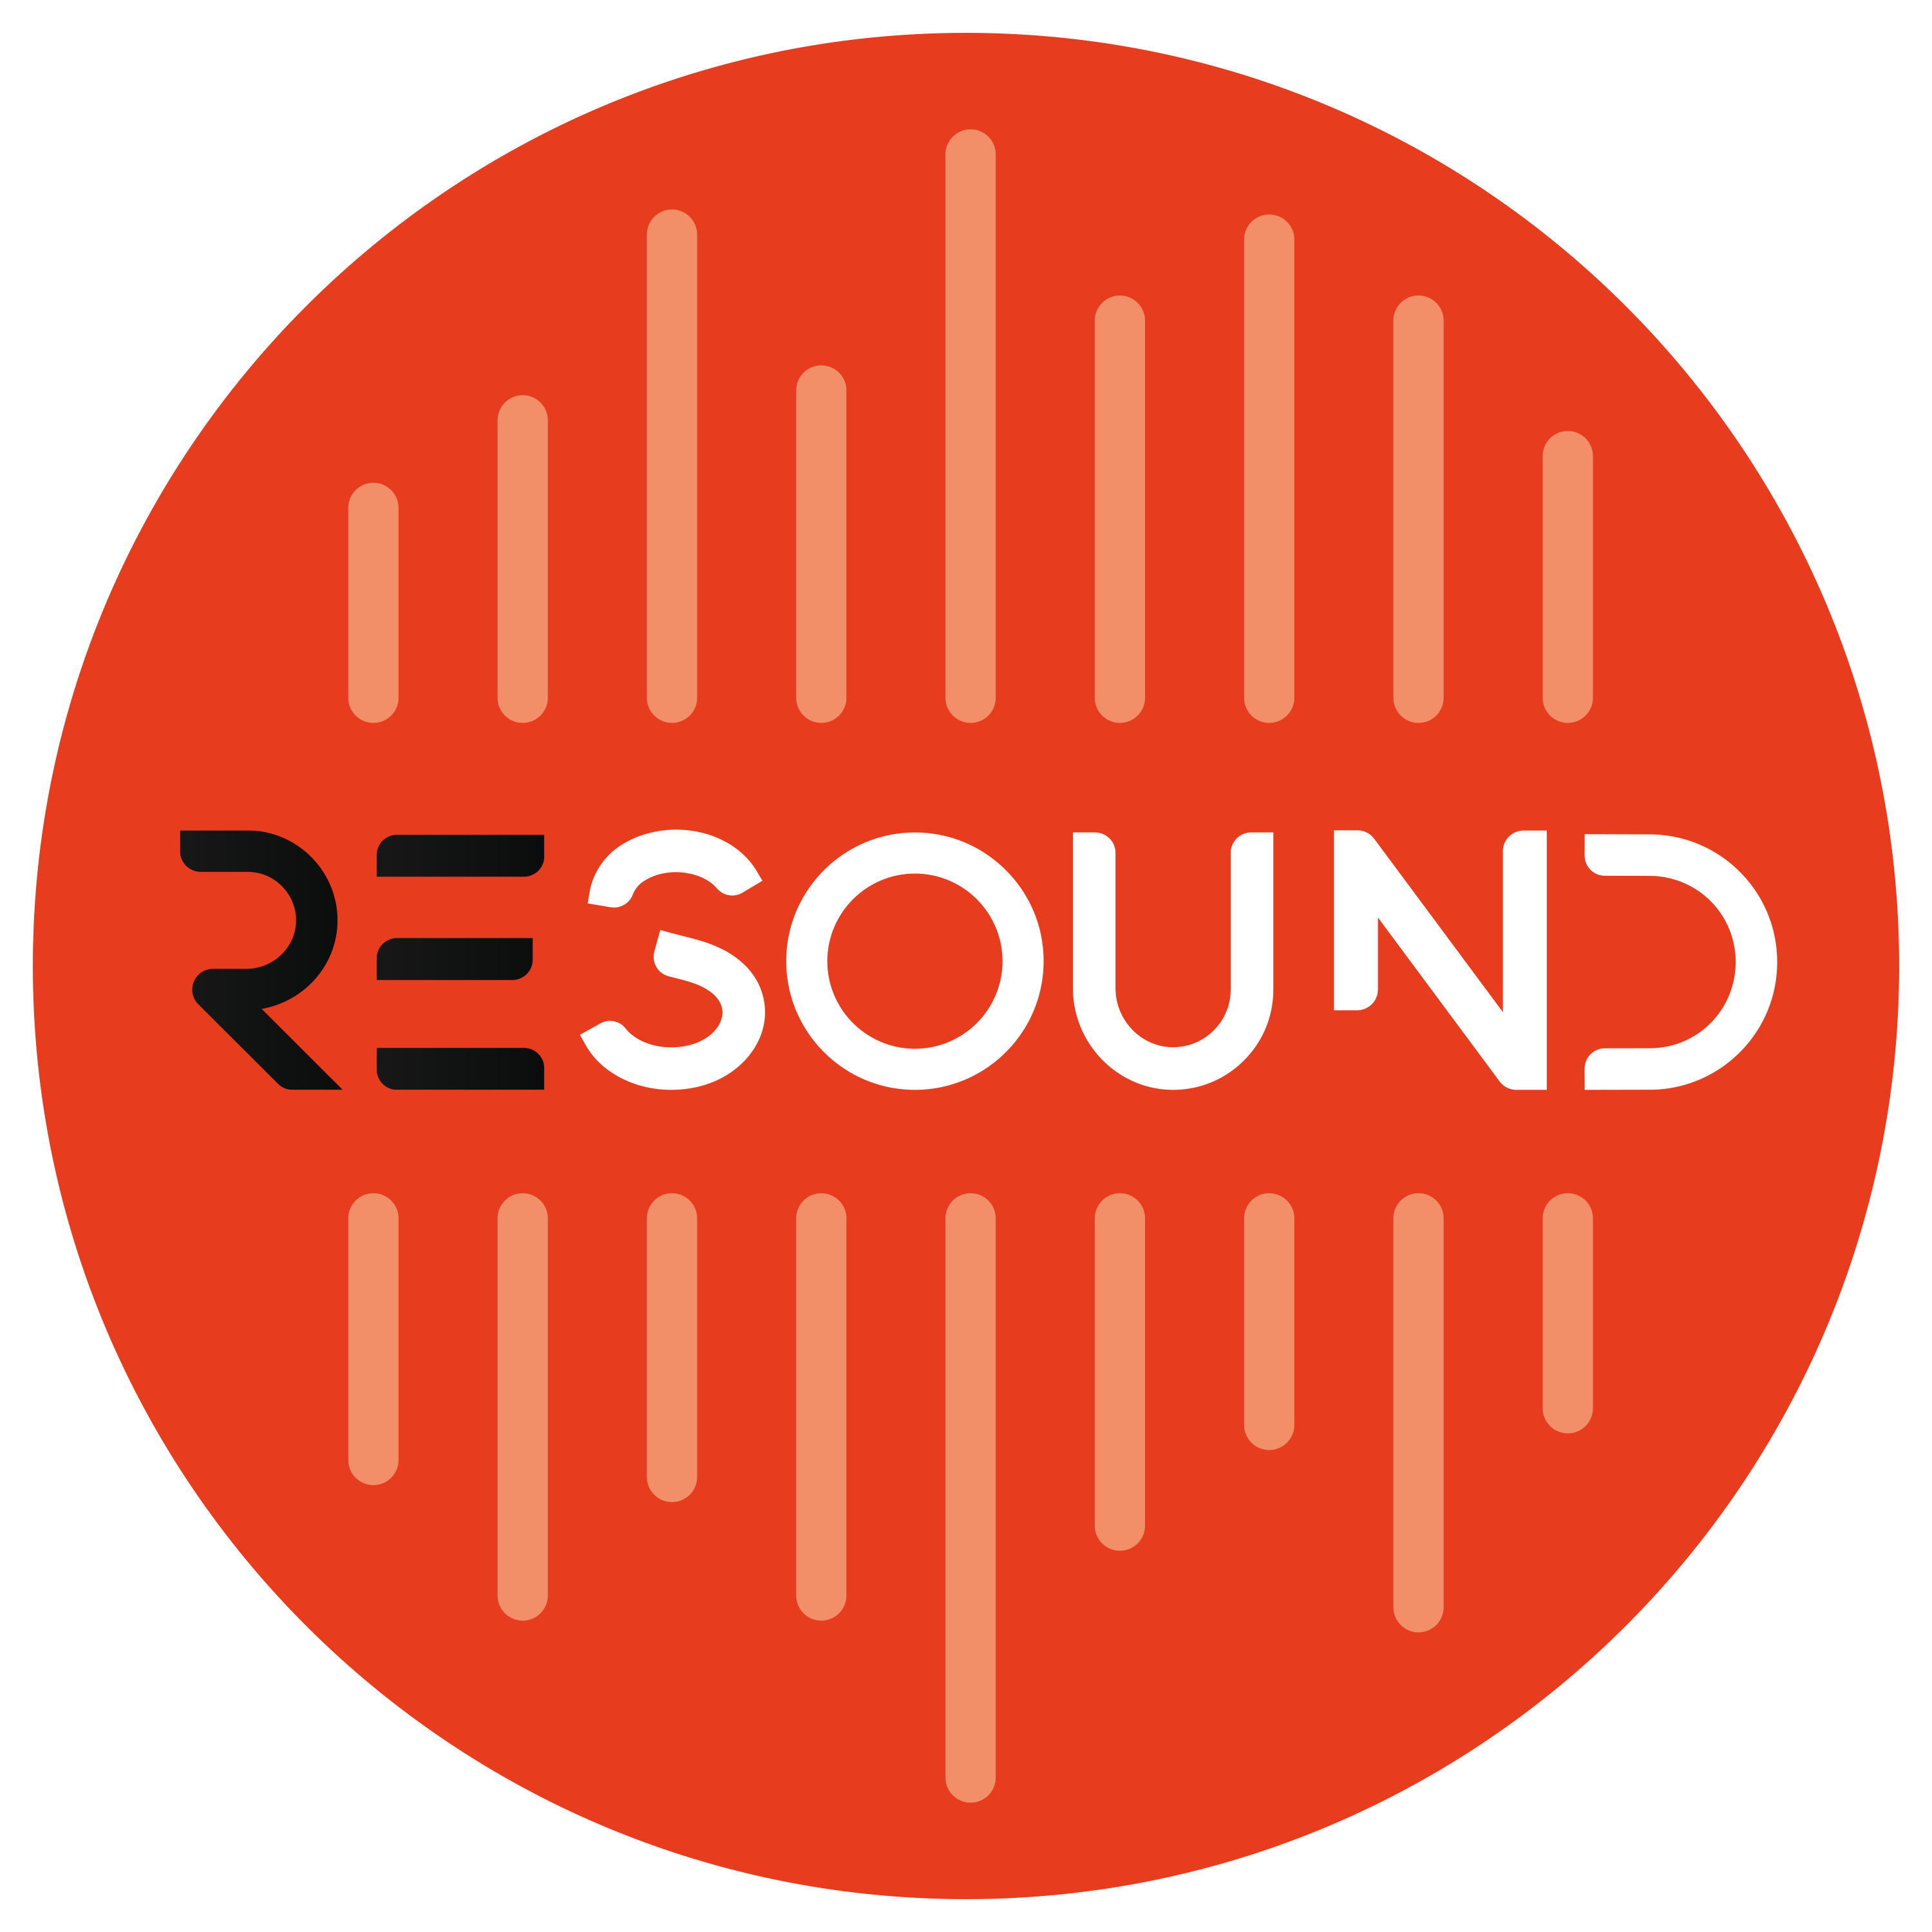 (c) Re-sound.co.uk